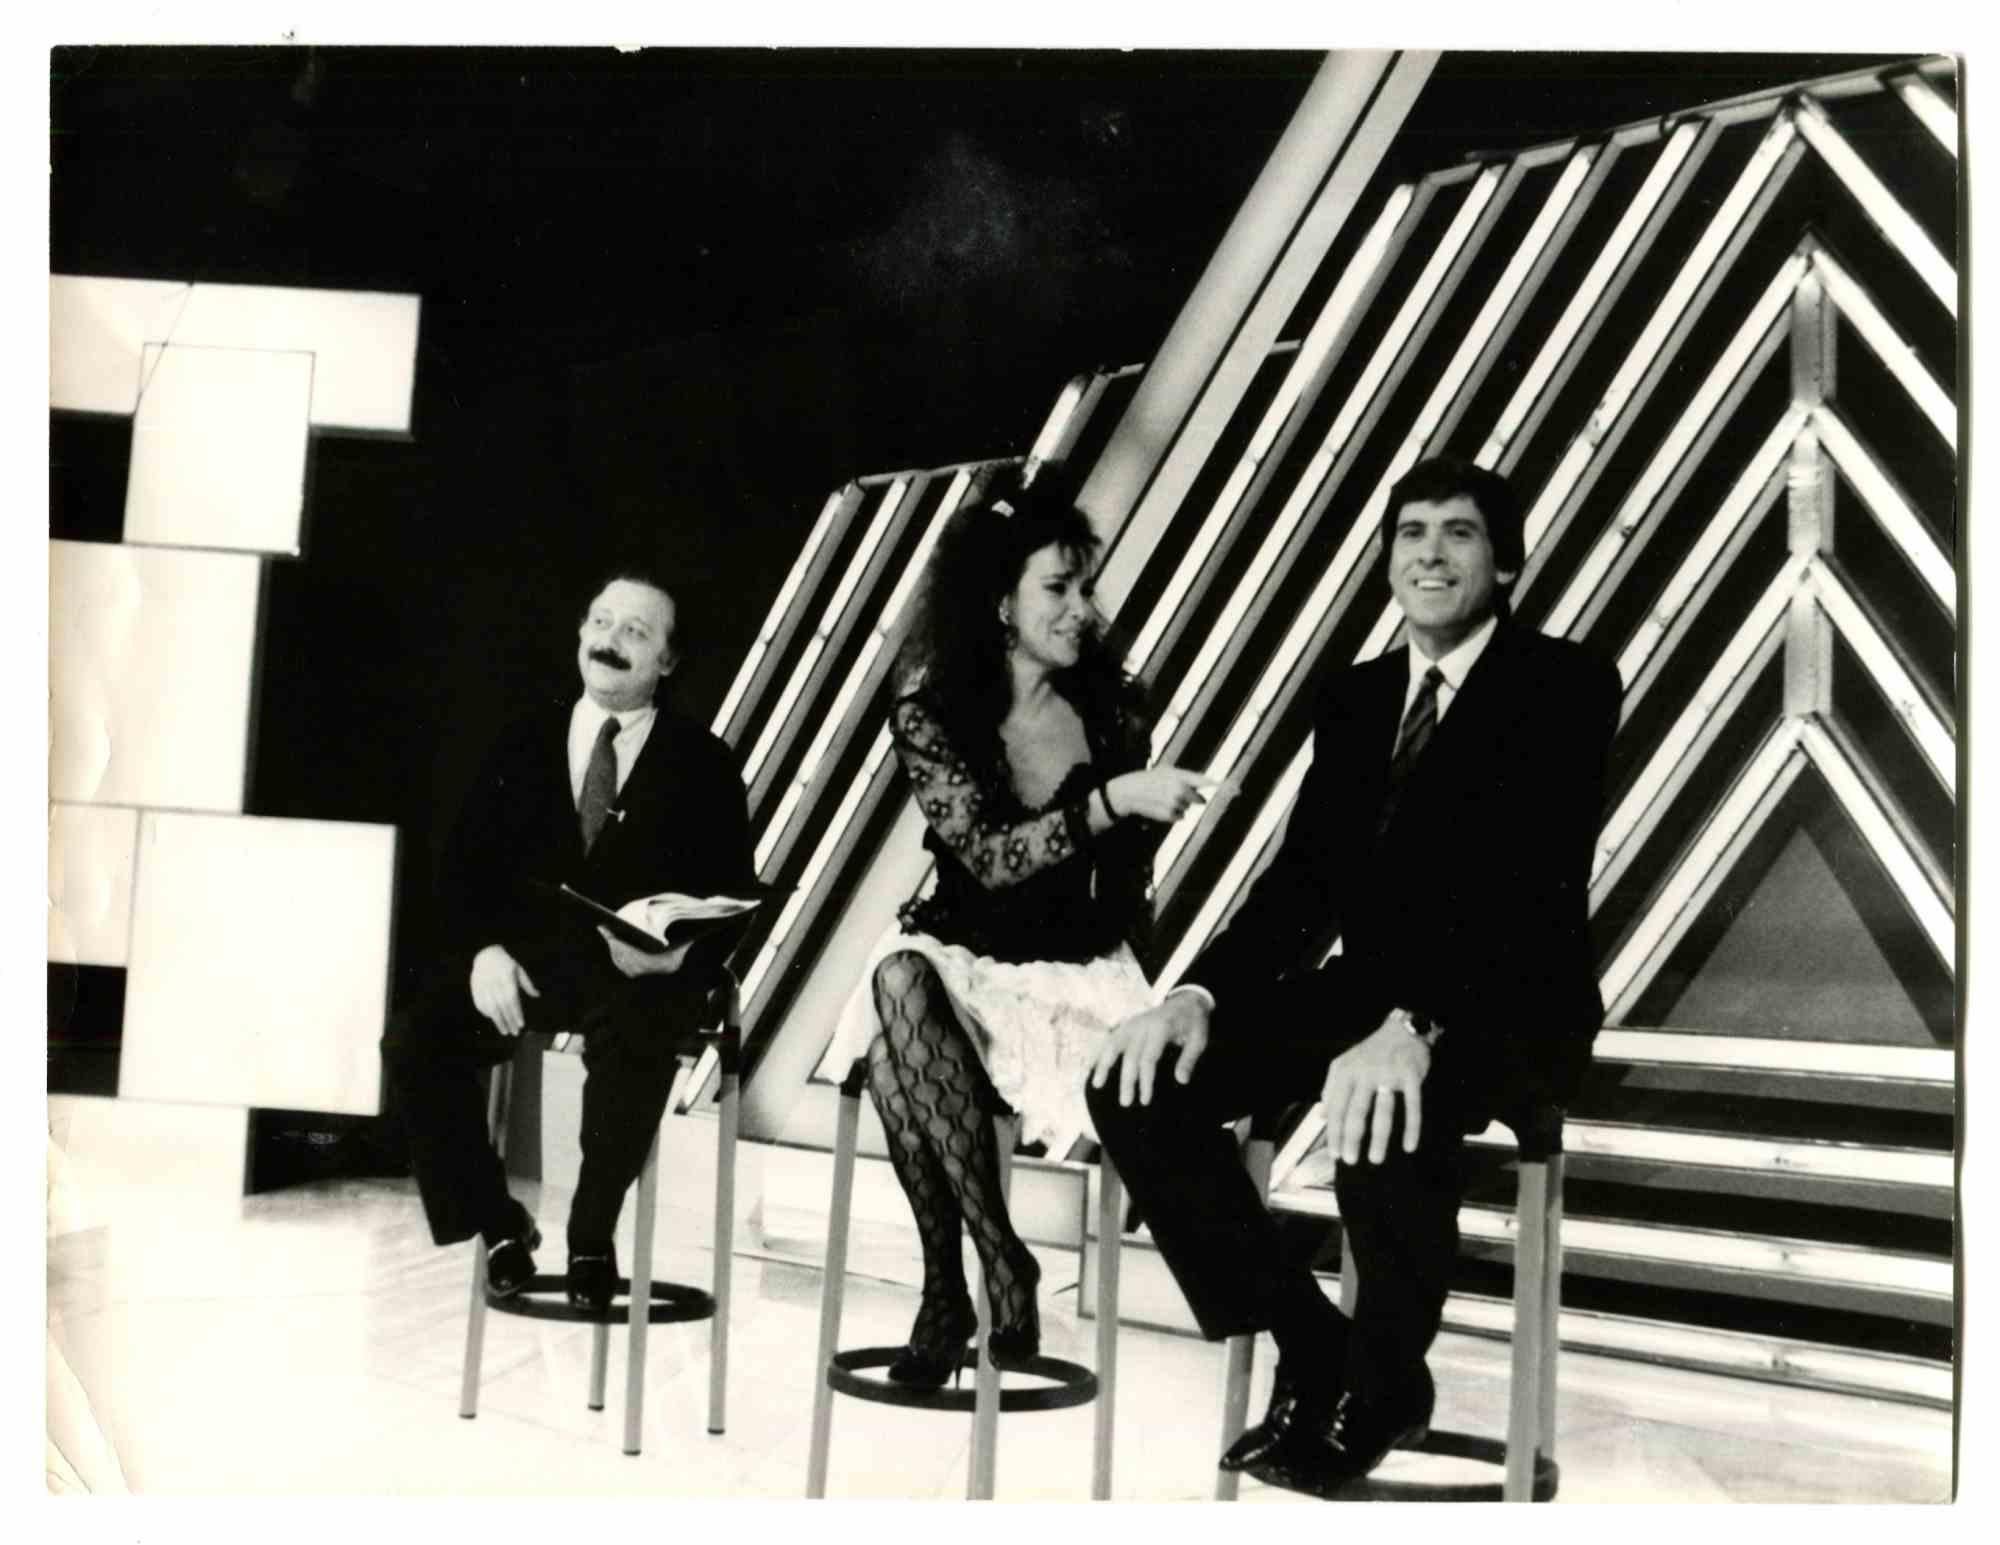 Gianni Minà, Ana Obregon et Gianni Morandi - Photo - années 1980